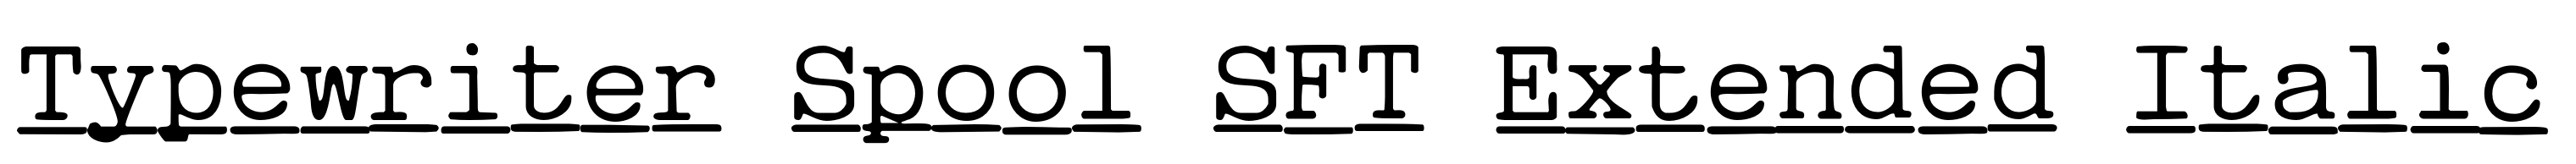 Typewriter Spool SFT Extended Italic